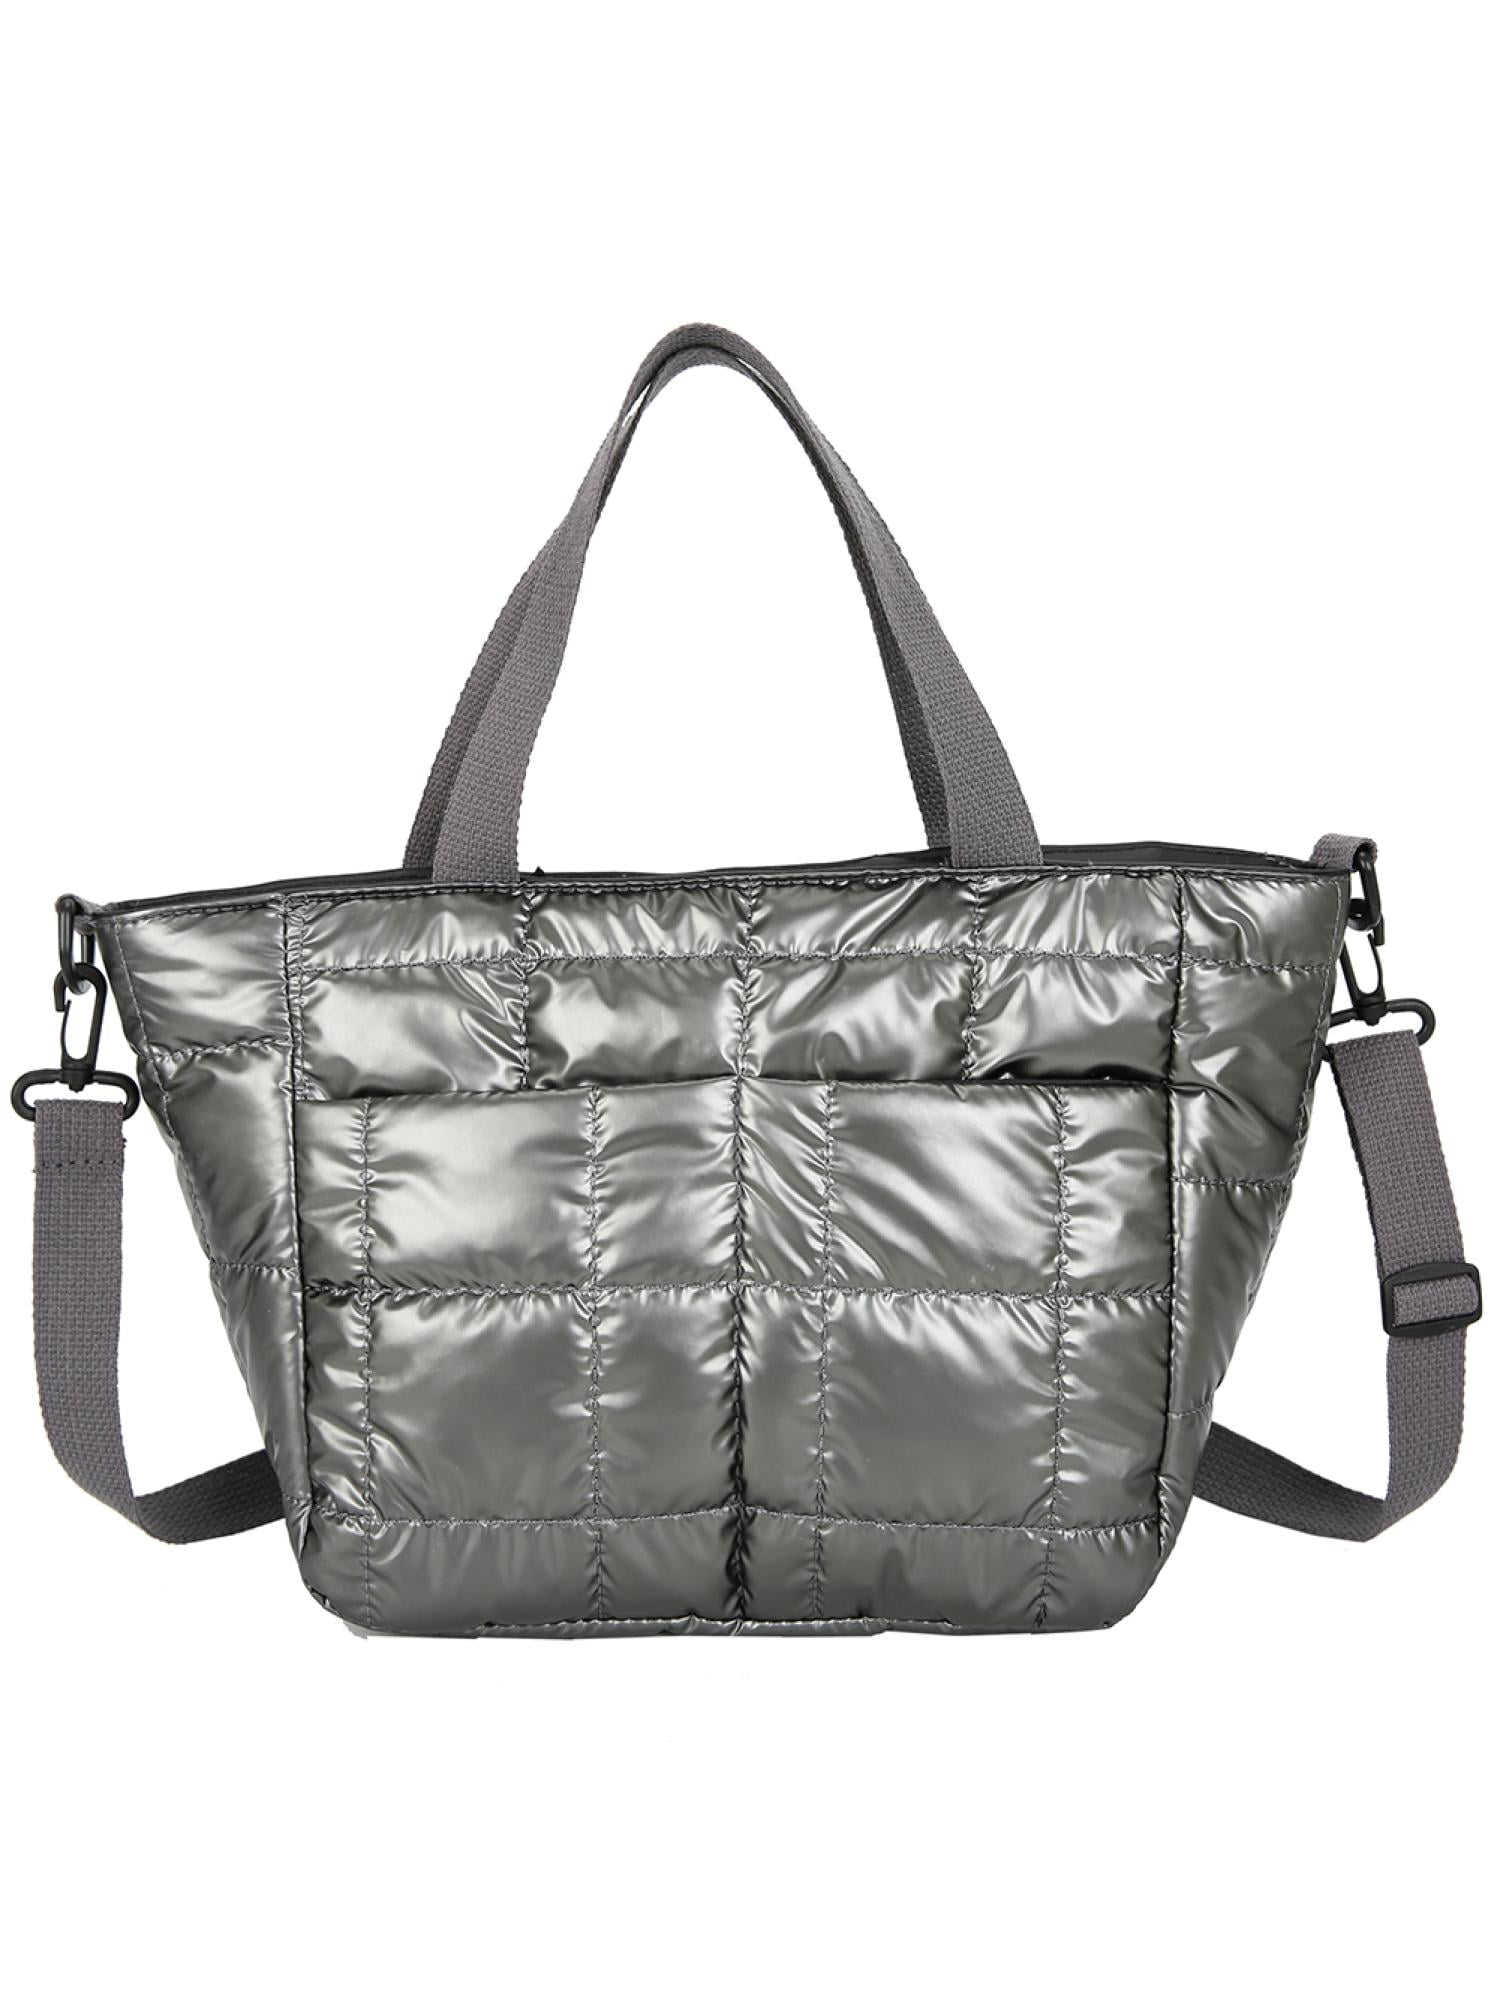 Xewsqmlo Women Nylon Padded Quilted Handbag Winter Warm Tote Bag